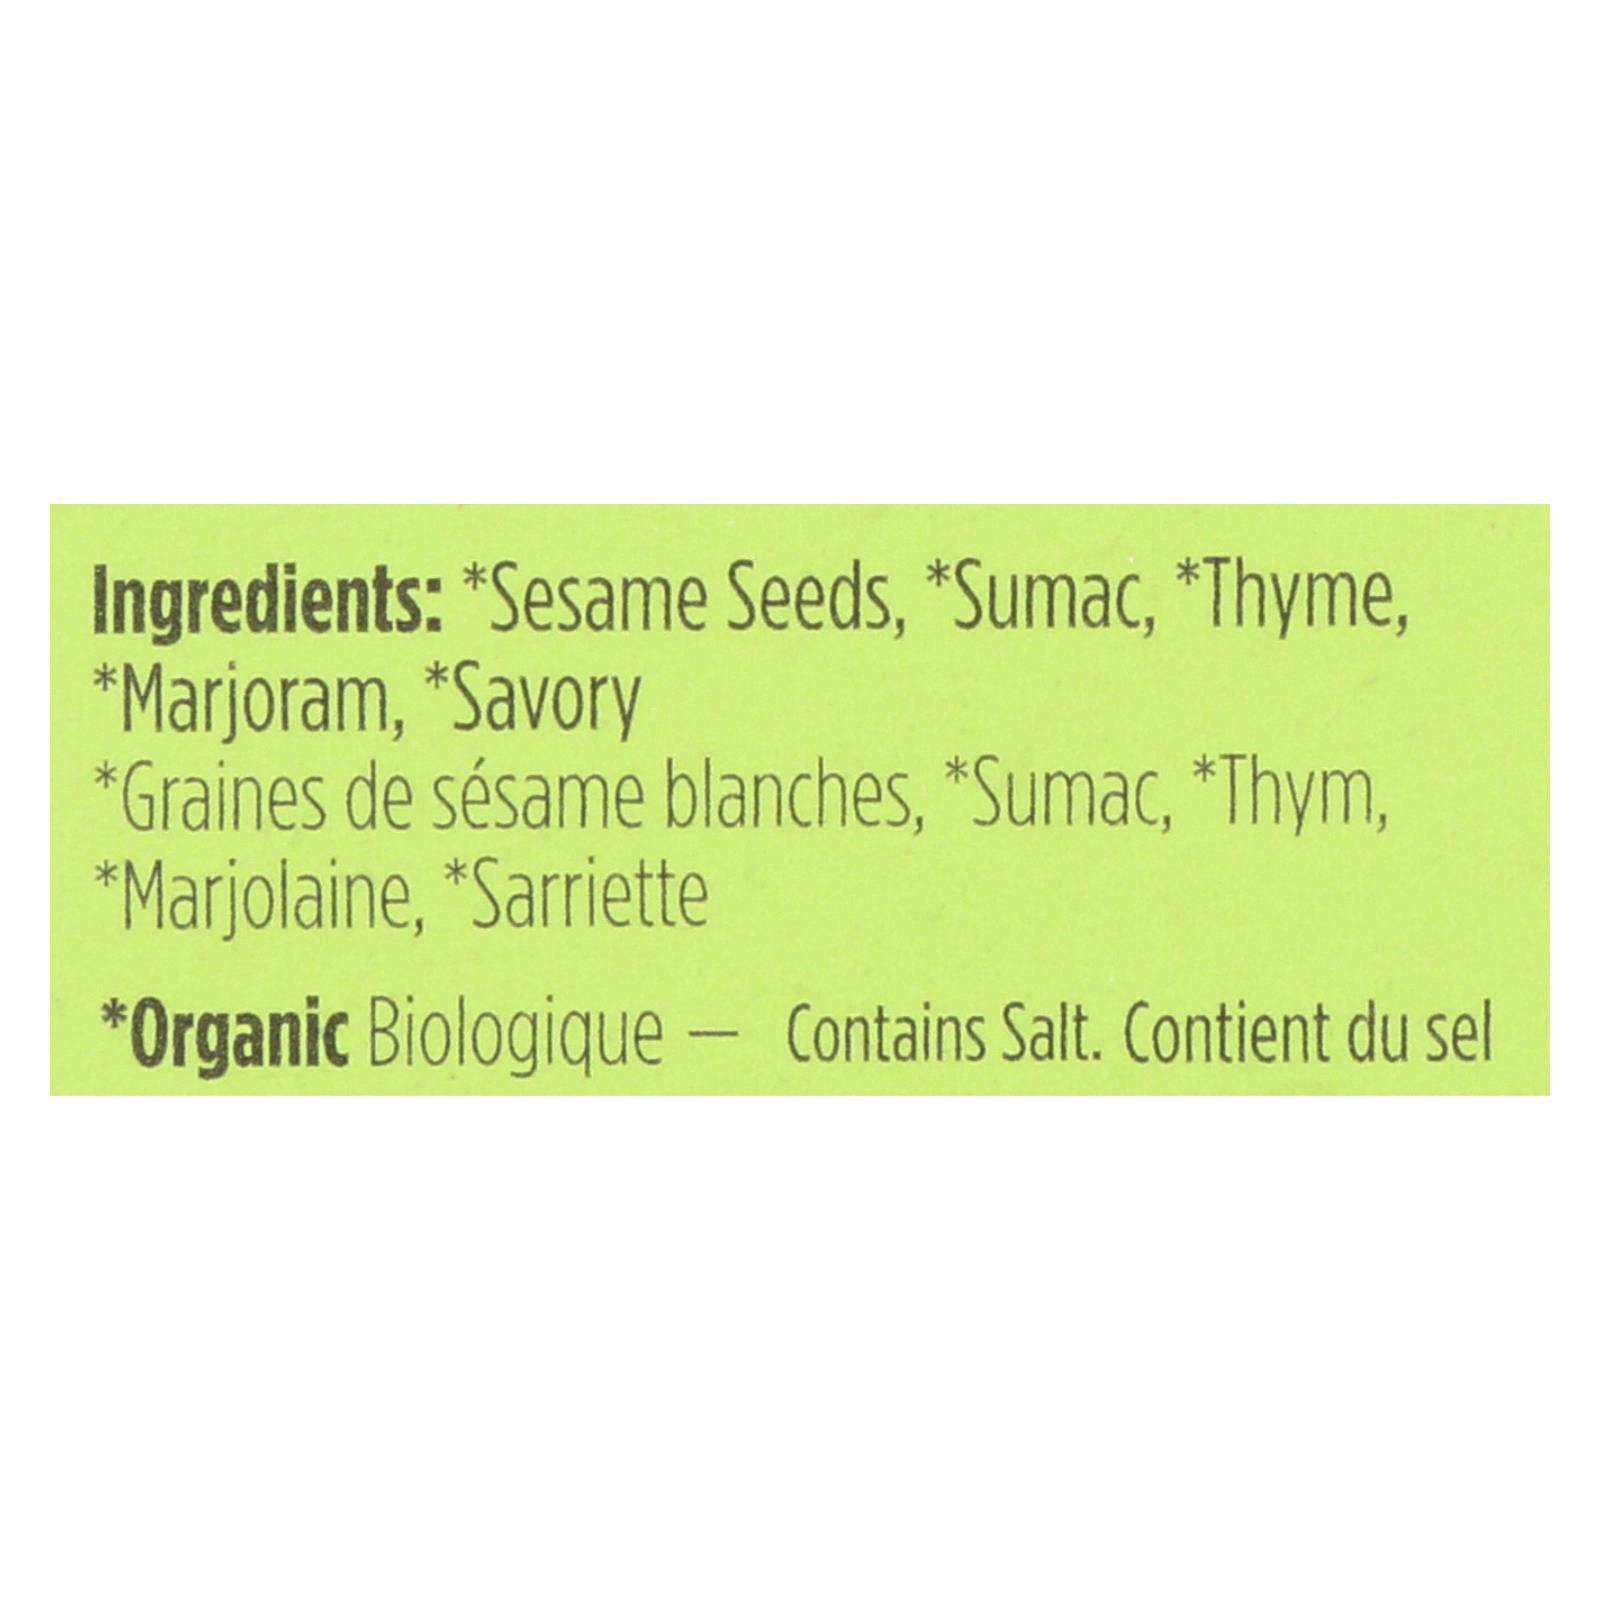 Buy Spicely Organics - Organic Zaatar Seasoning - Case Of 6 - 0.35 Oz.  at OnlyNaturals.us